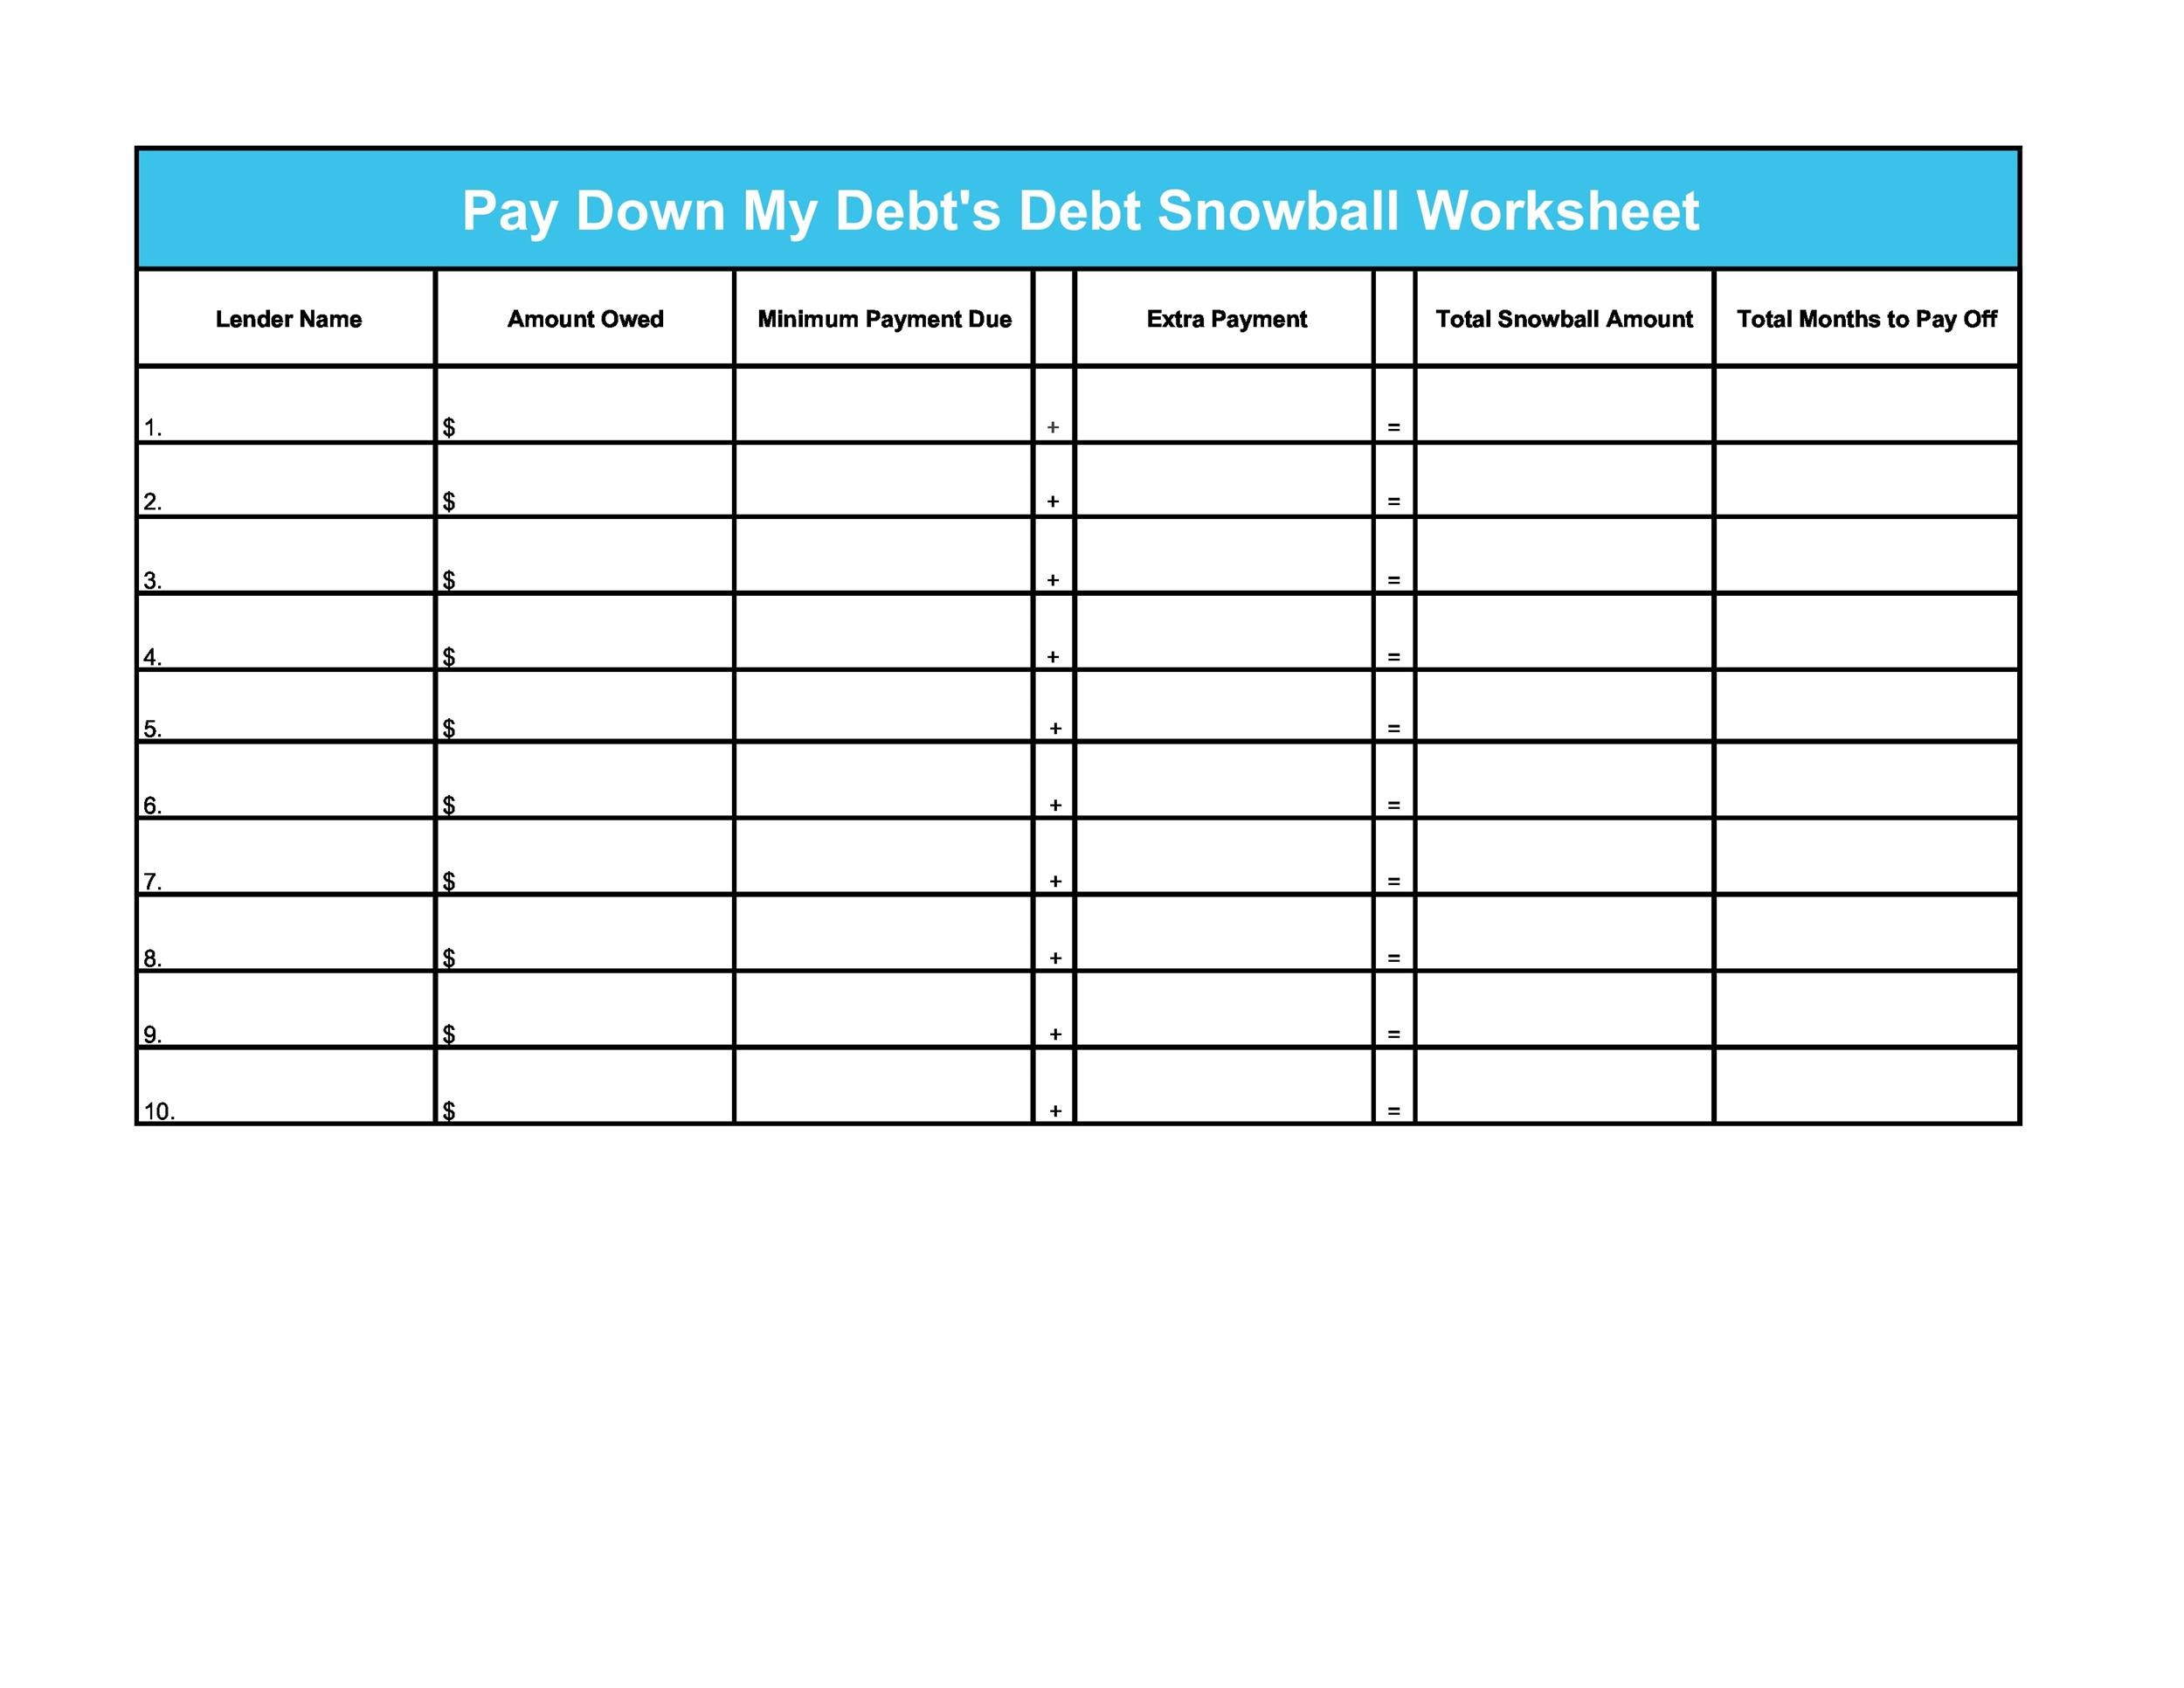 38-debt-snowball-spreadsheets-forms-calculators